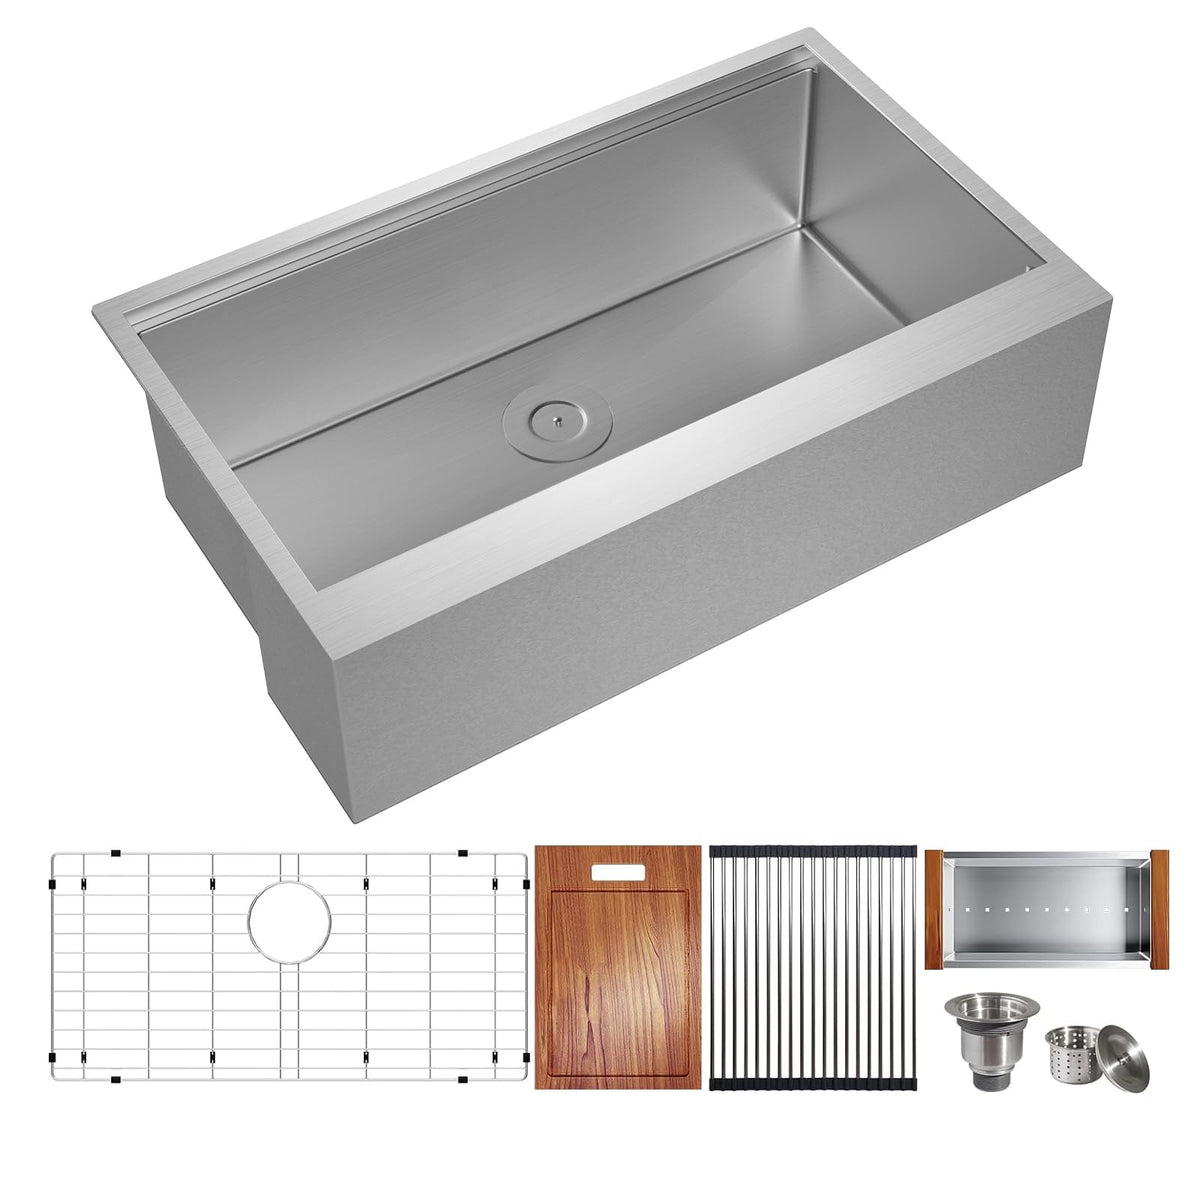 TECASA Flat Apron Front 16 Gauge Stainless Steel Kitchen Sink—33 inch Workstation Farmhouse Sink